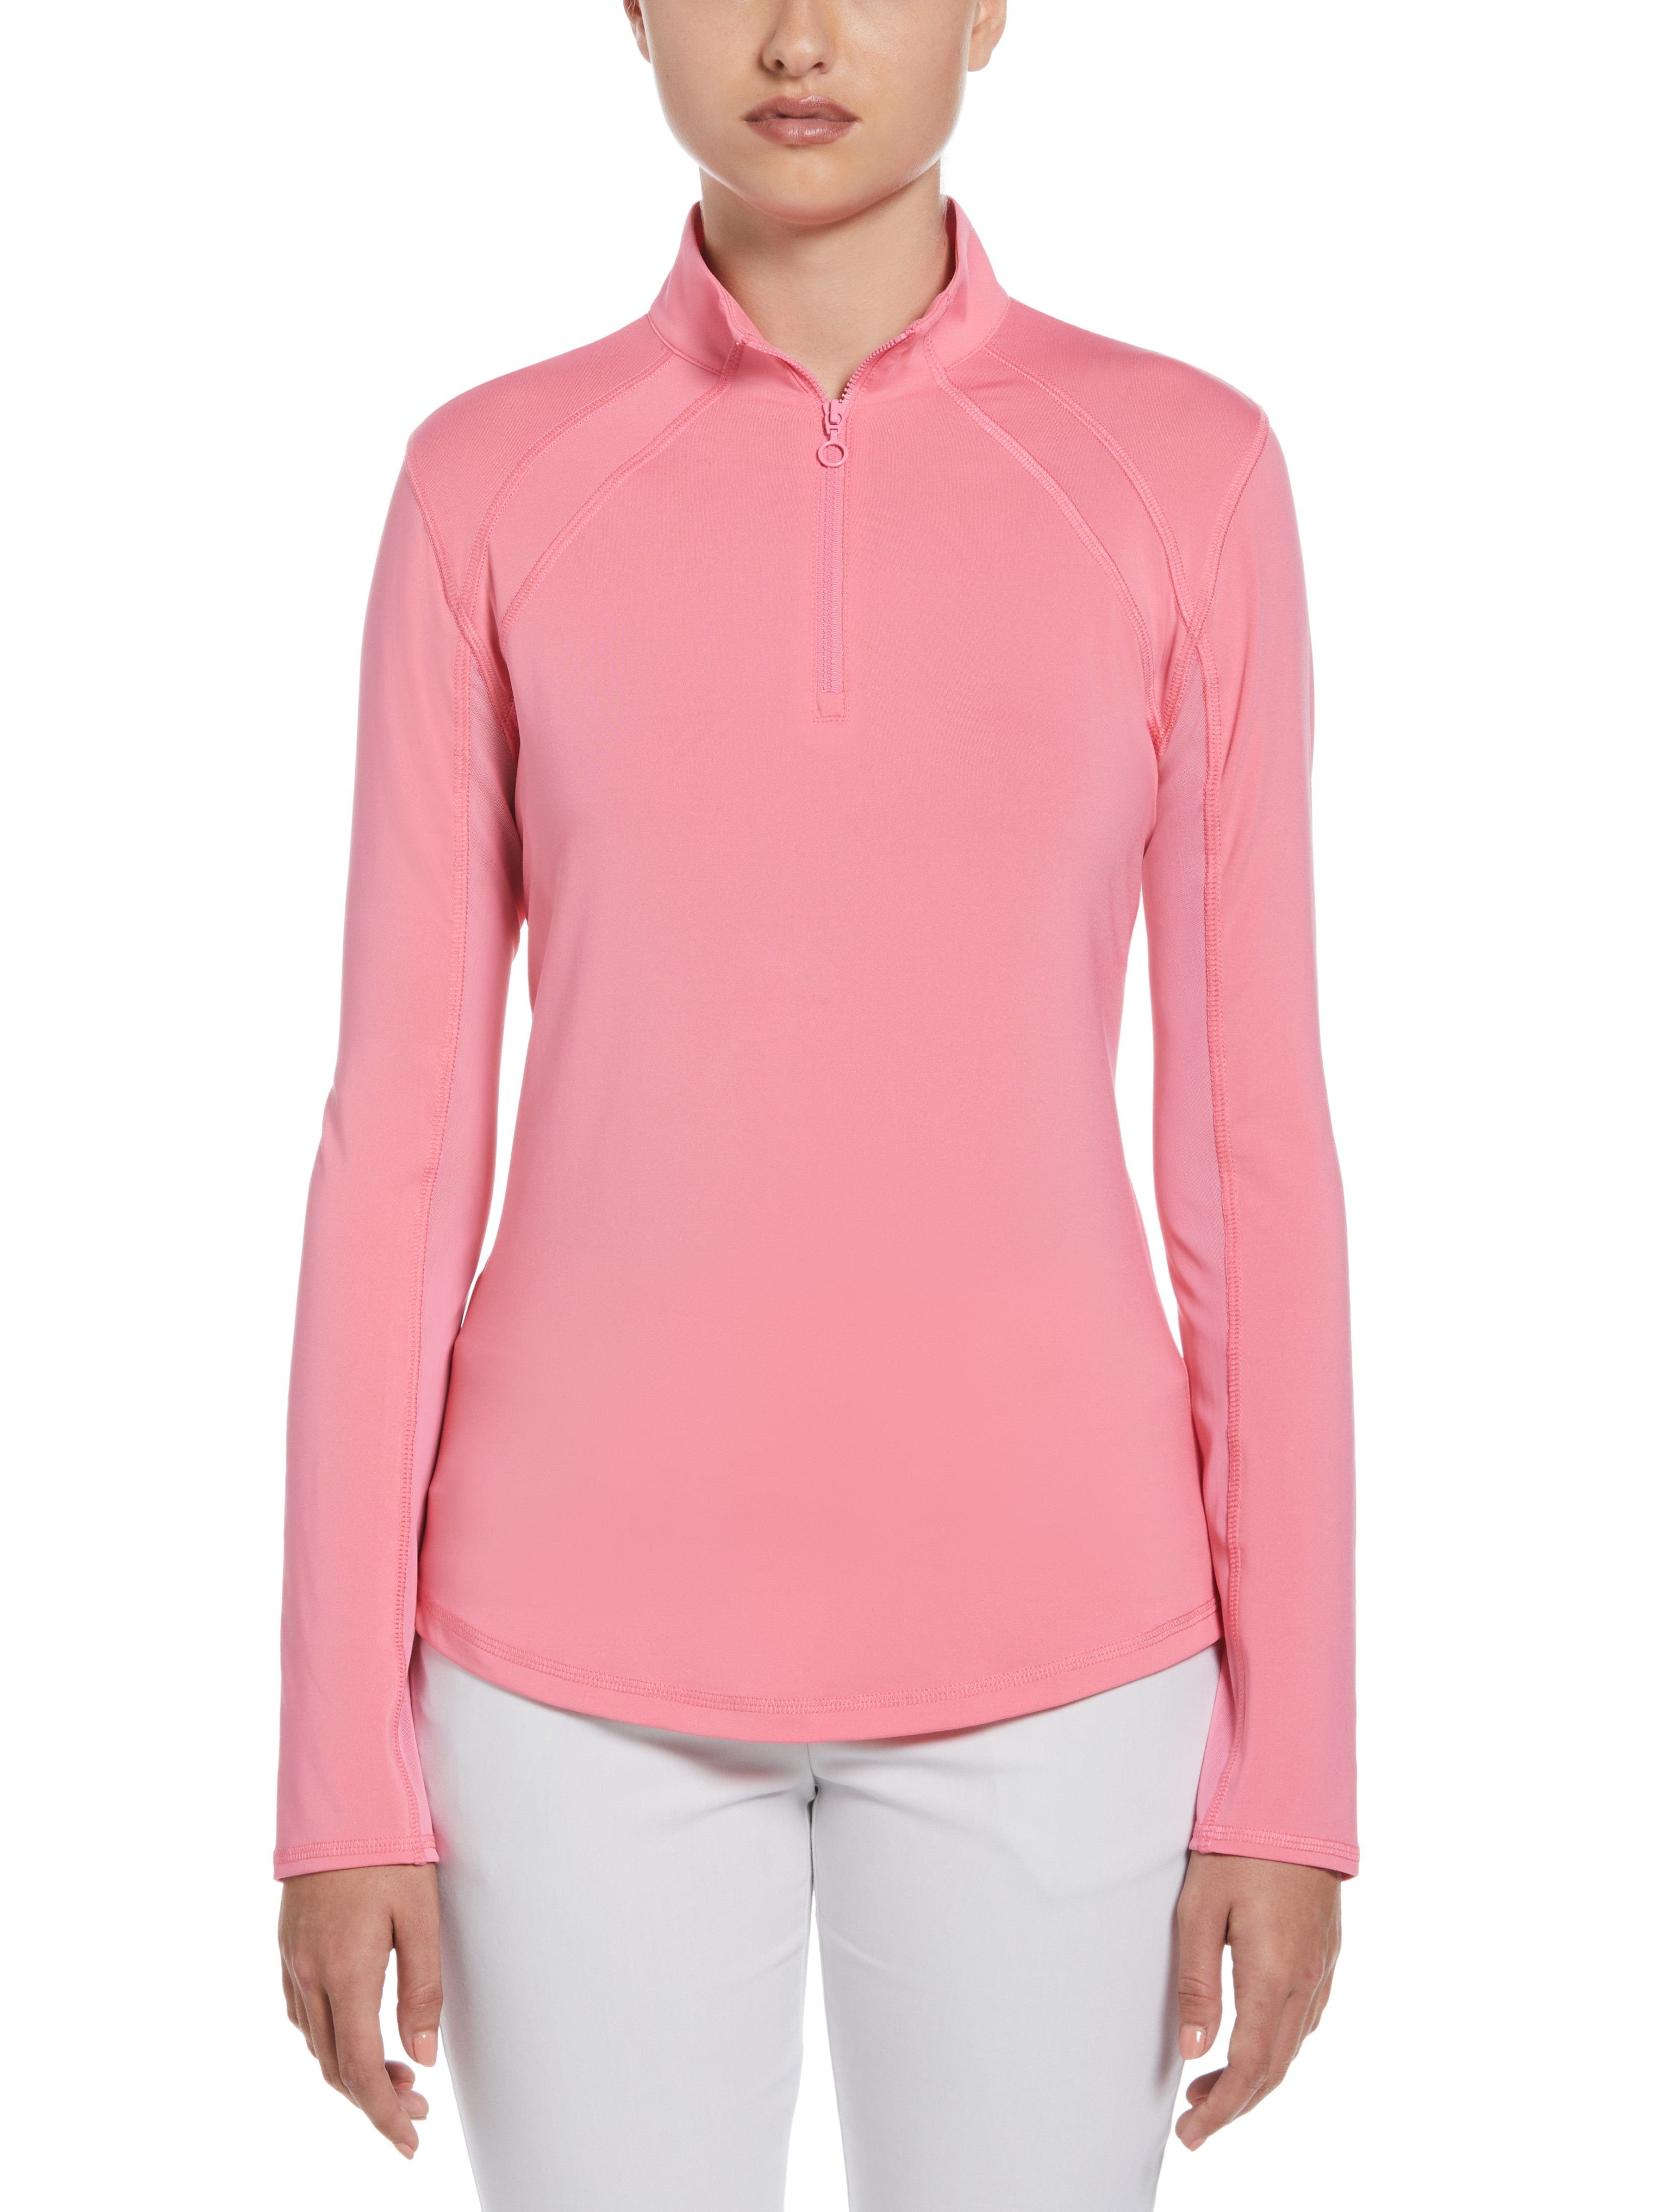 PGA TOUR Apparel Womens Sun Protection Golf Shirt w/ Mesh Panels, Size 2XL, Flowering Ginger Pink, Polyester/Spandex | Golf Apparel Shop